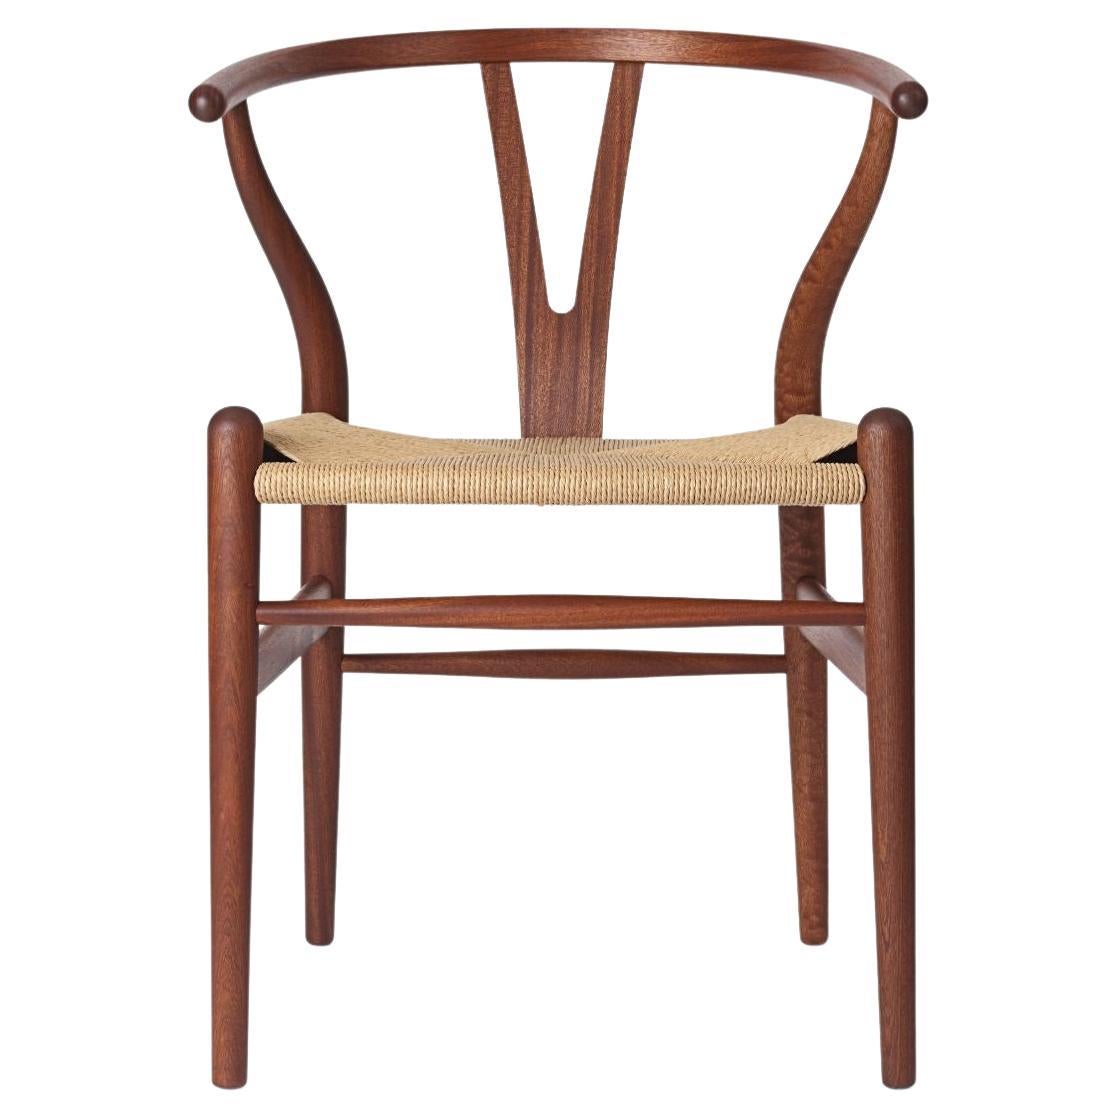 Hans J. Wegner 'CH24 Wishbone' Chair in Mahogany and Oil for Carl Hansen & Son